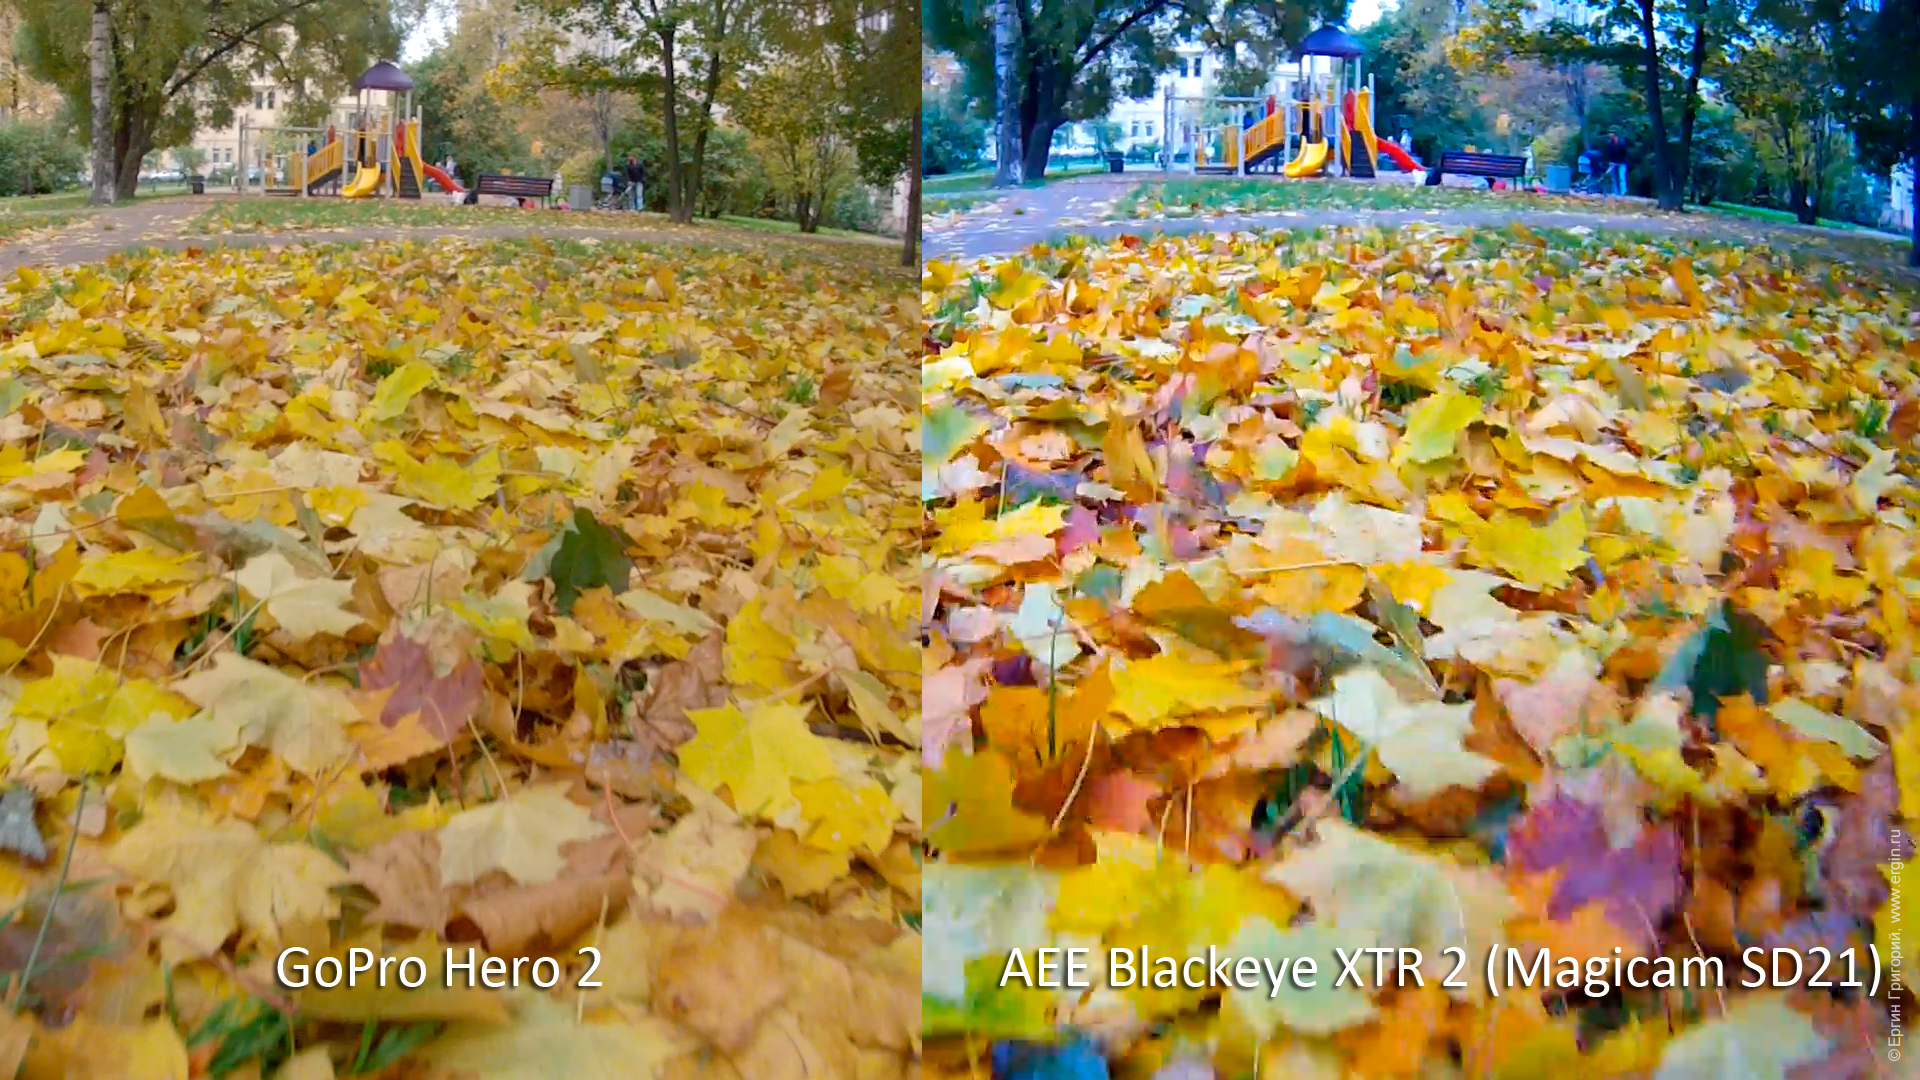 AEE Blackeye XTR 2 (AEE Magicam SD21) vs GoPro Hero 2: опавшие листья и синева